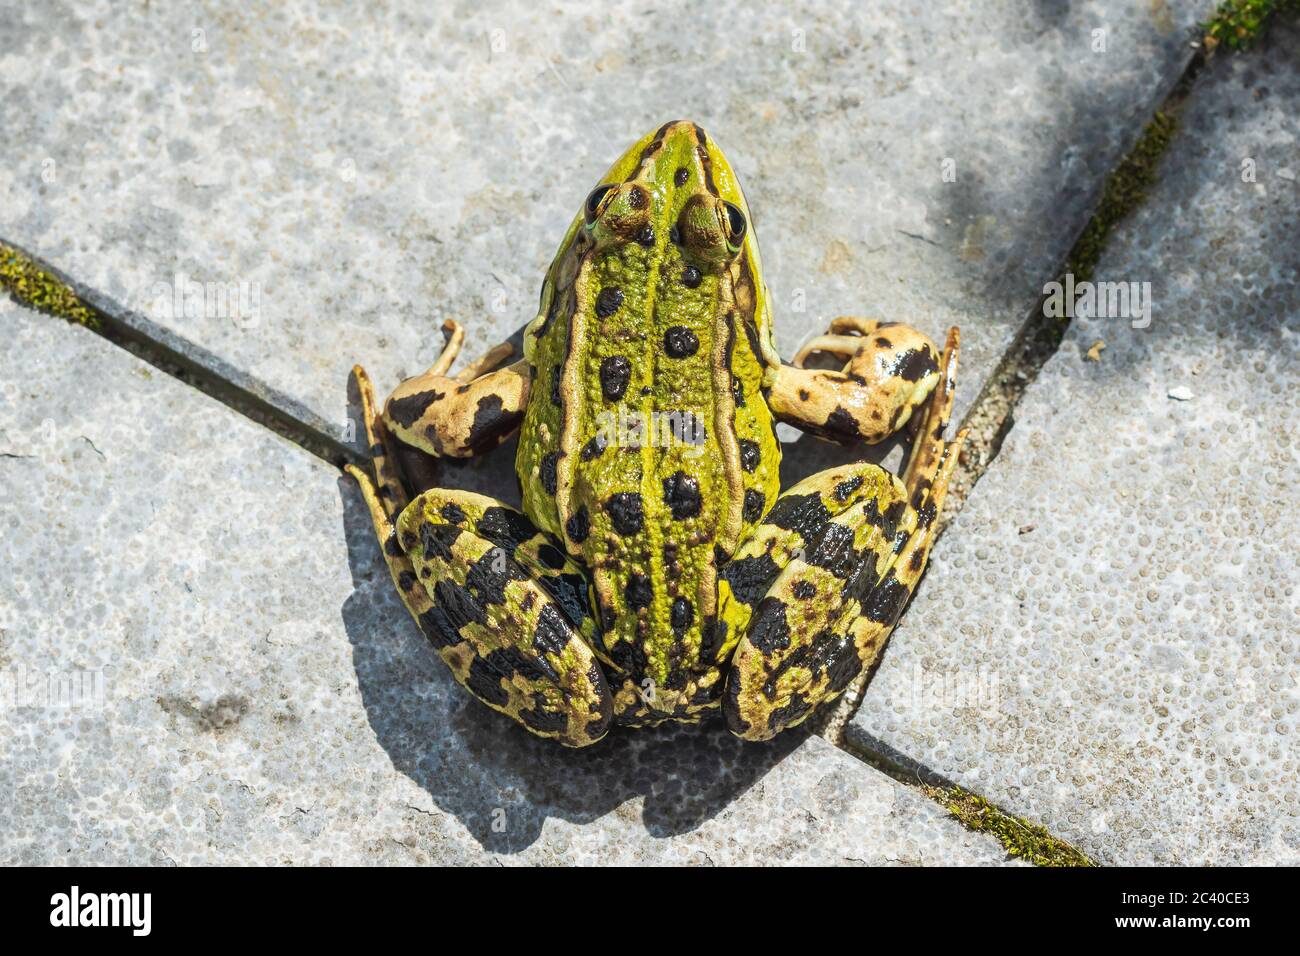 Closeup of a marsh frog, Pelophylax ridibundus, top view on a garden floor. Low point of view, selective focus. Stock Photo